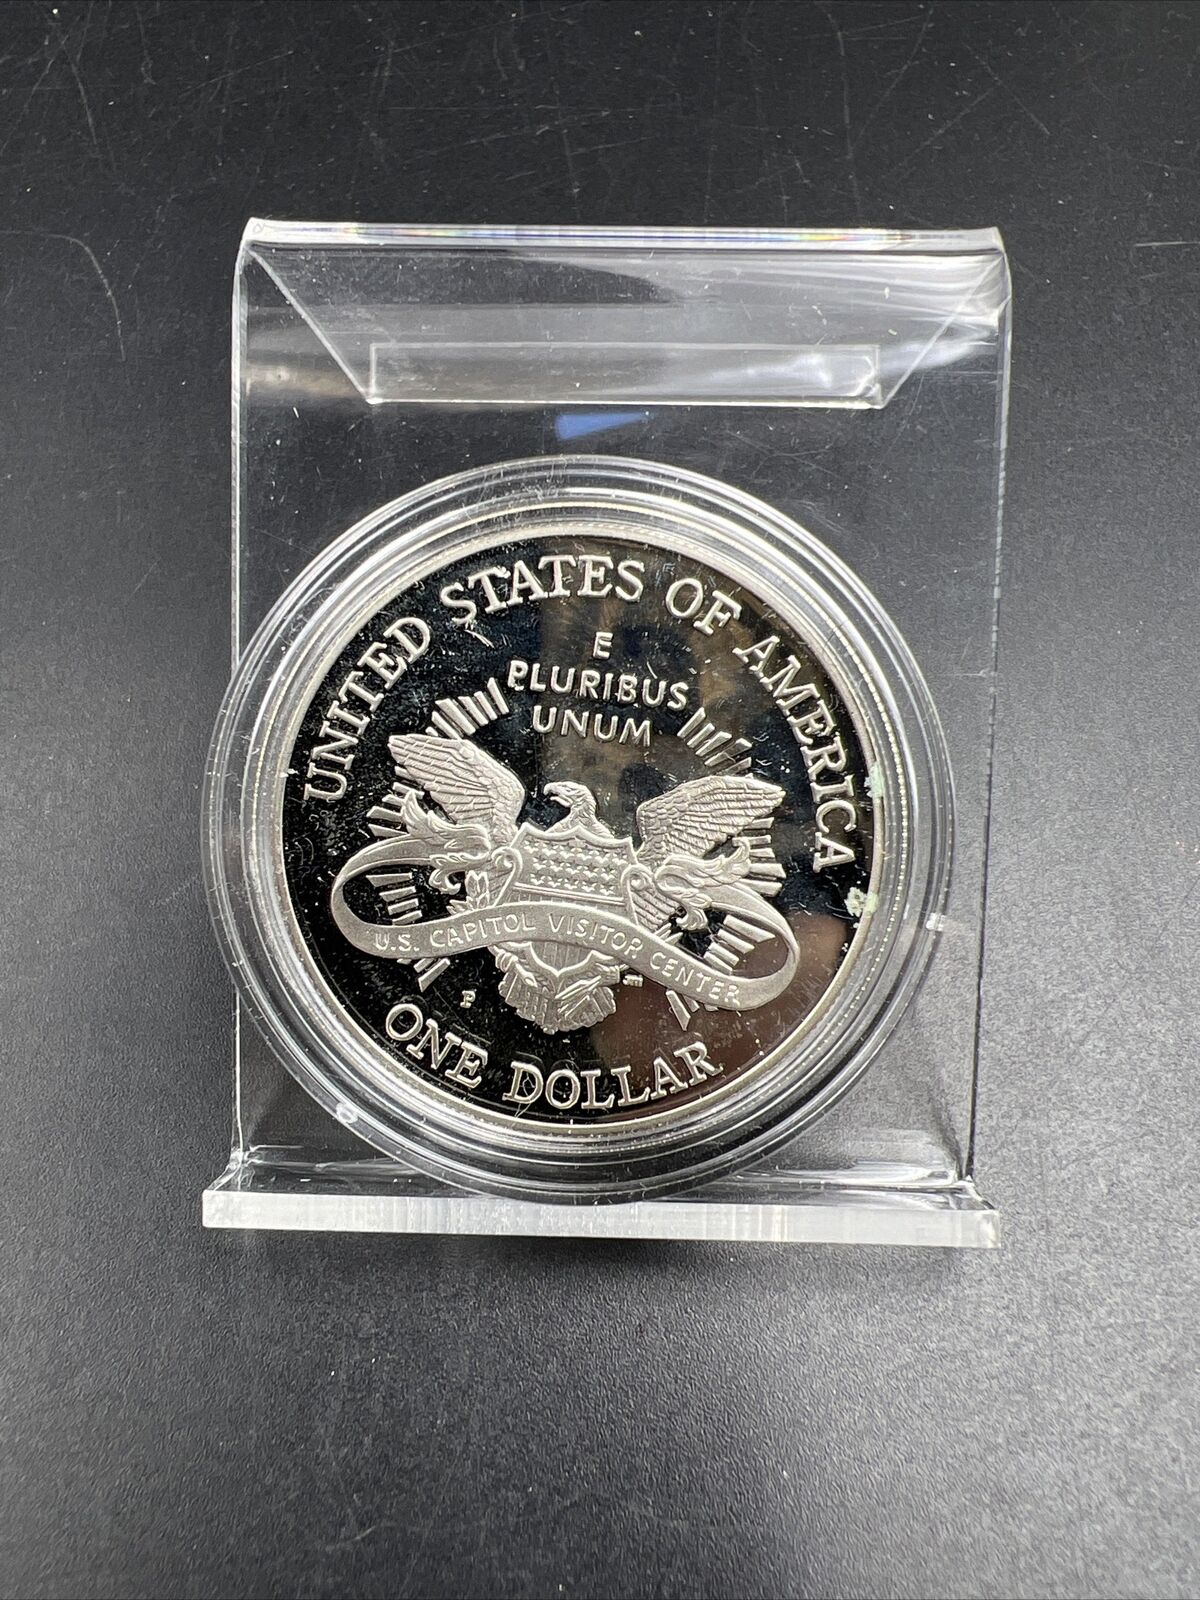 2001 P $1 Capitol visitors Silver Commemorative Dollar Coin GEM Proof in Cap #B